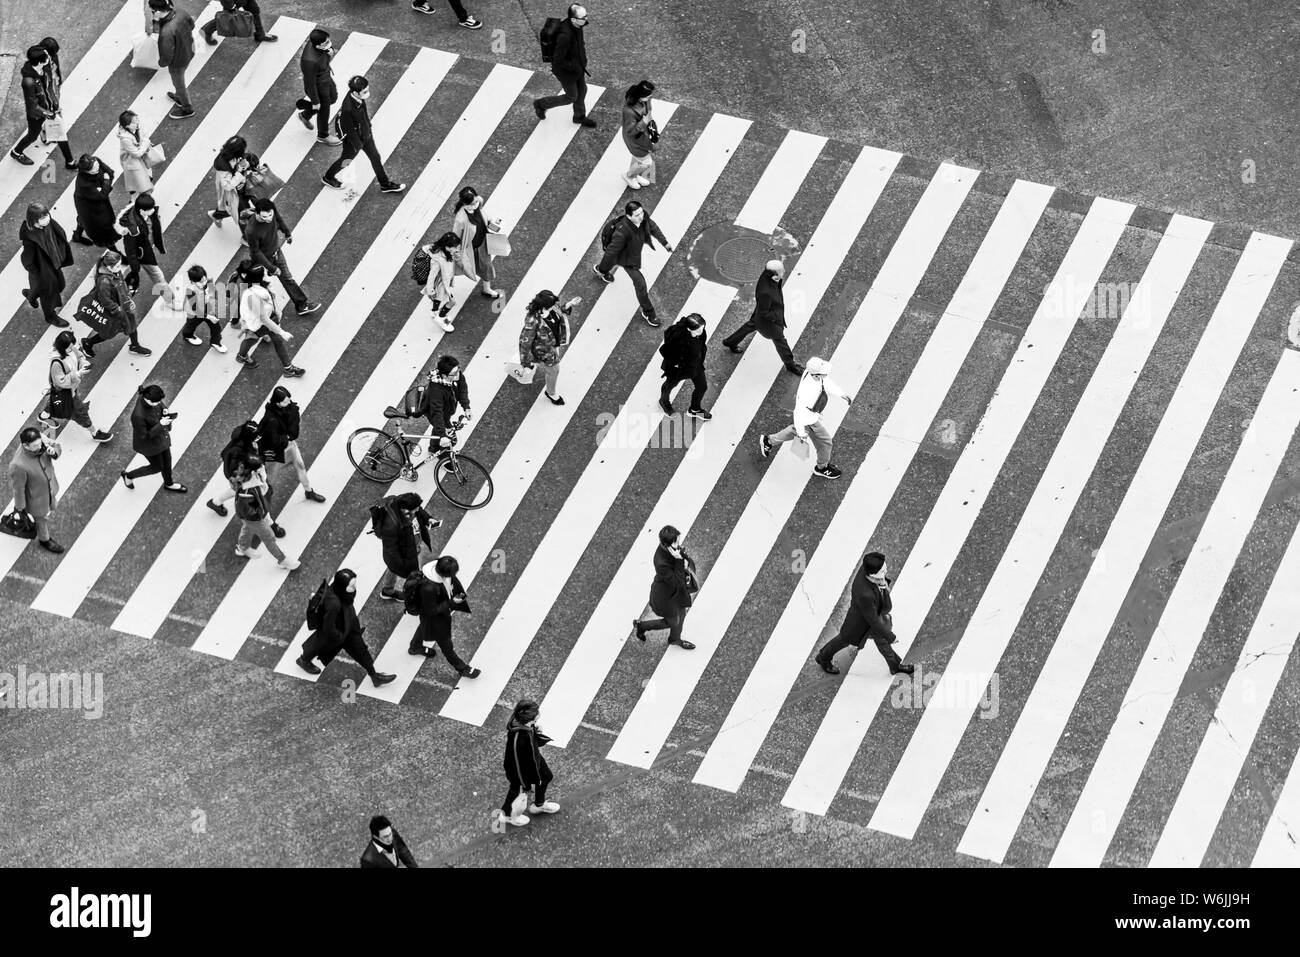 Shibuya crossing, crowds at intersection, many people and cyclists cross zebra crossing, black and white, Shibuya, Udagawacho, Tokyo, Japan Stock Photo